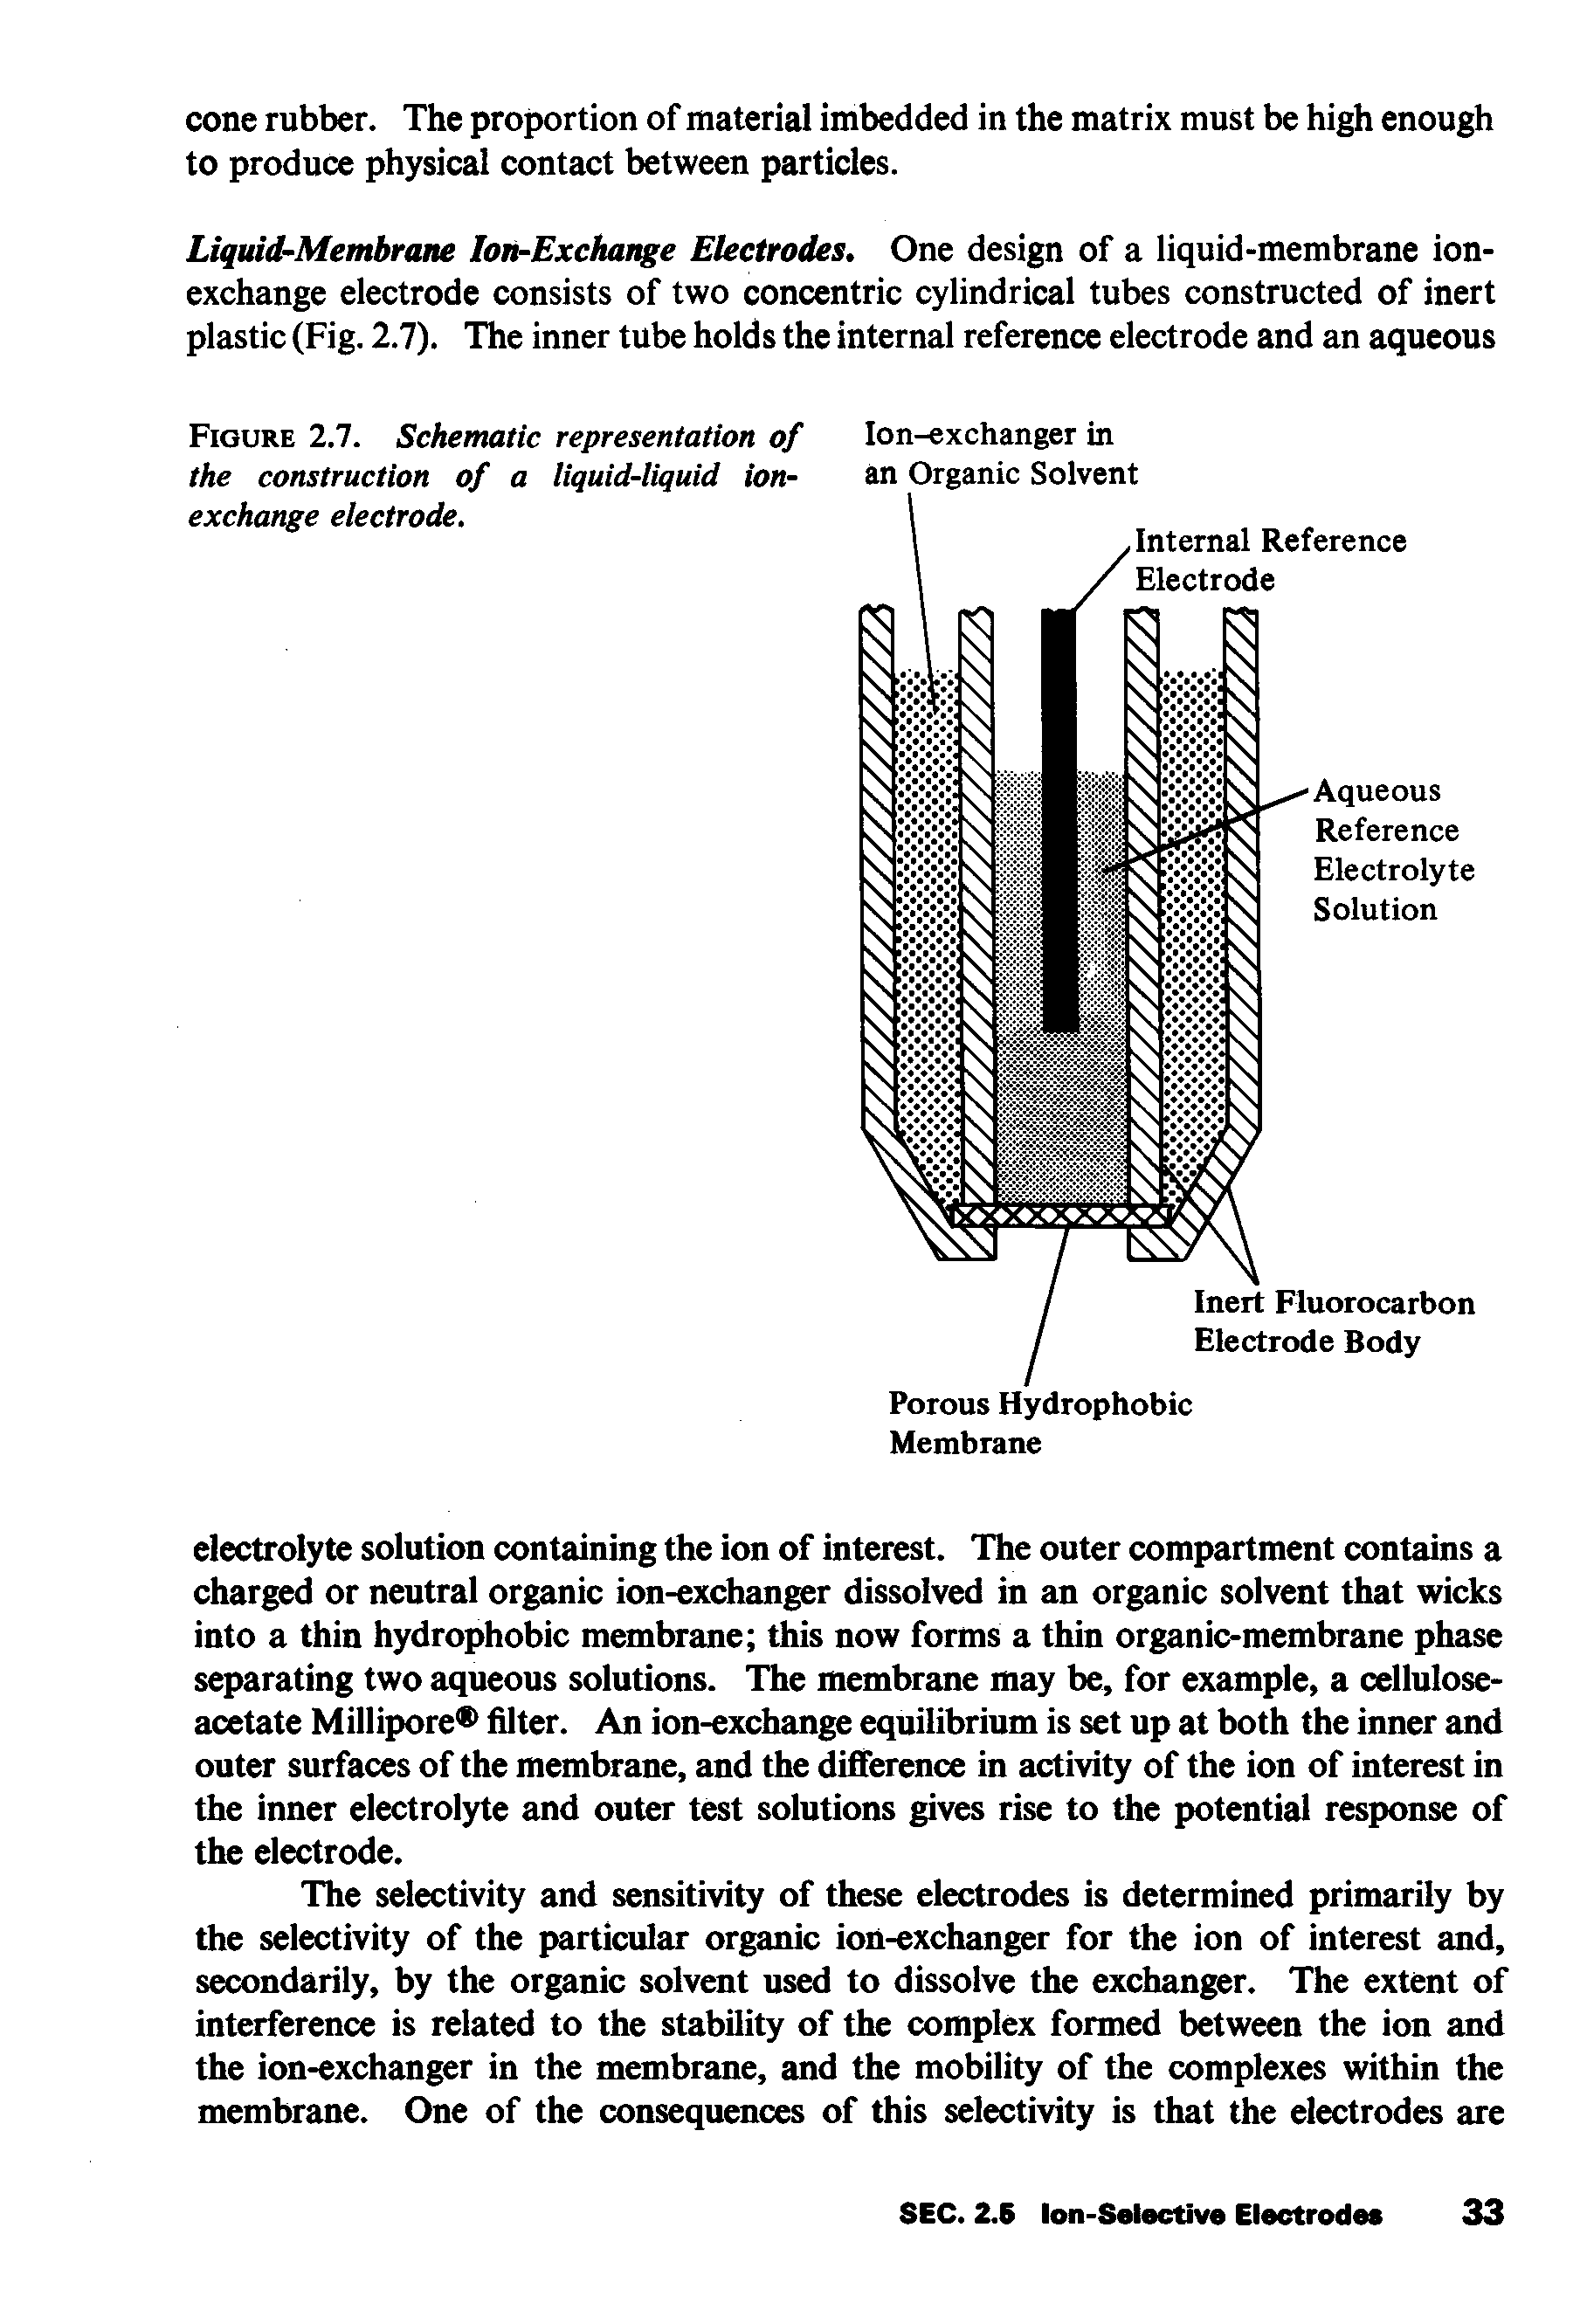 Figure 2.7. Schematic representation of the construction of a liquid-liquid ion-exchange electrode.